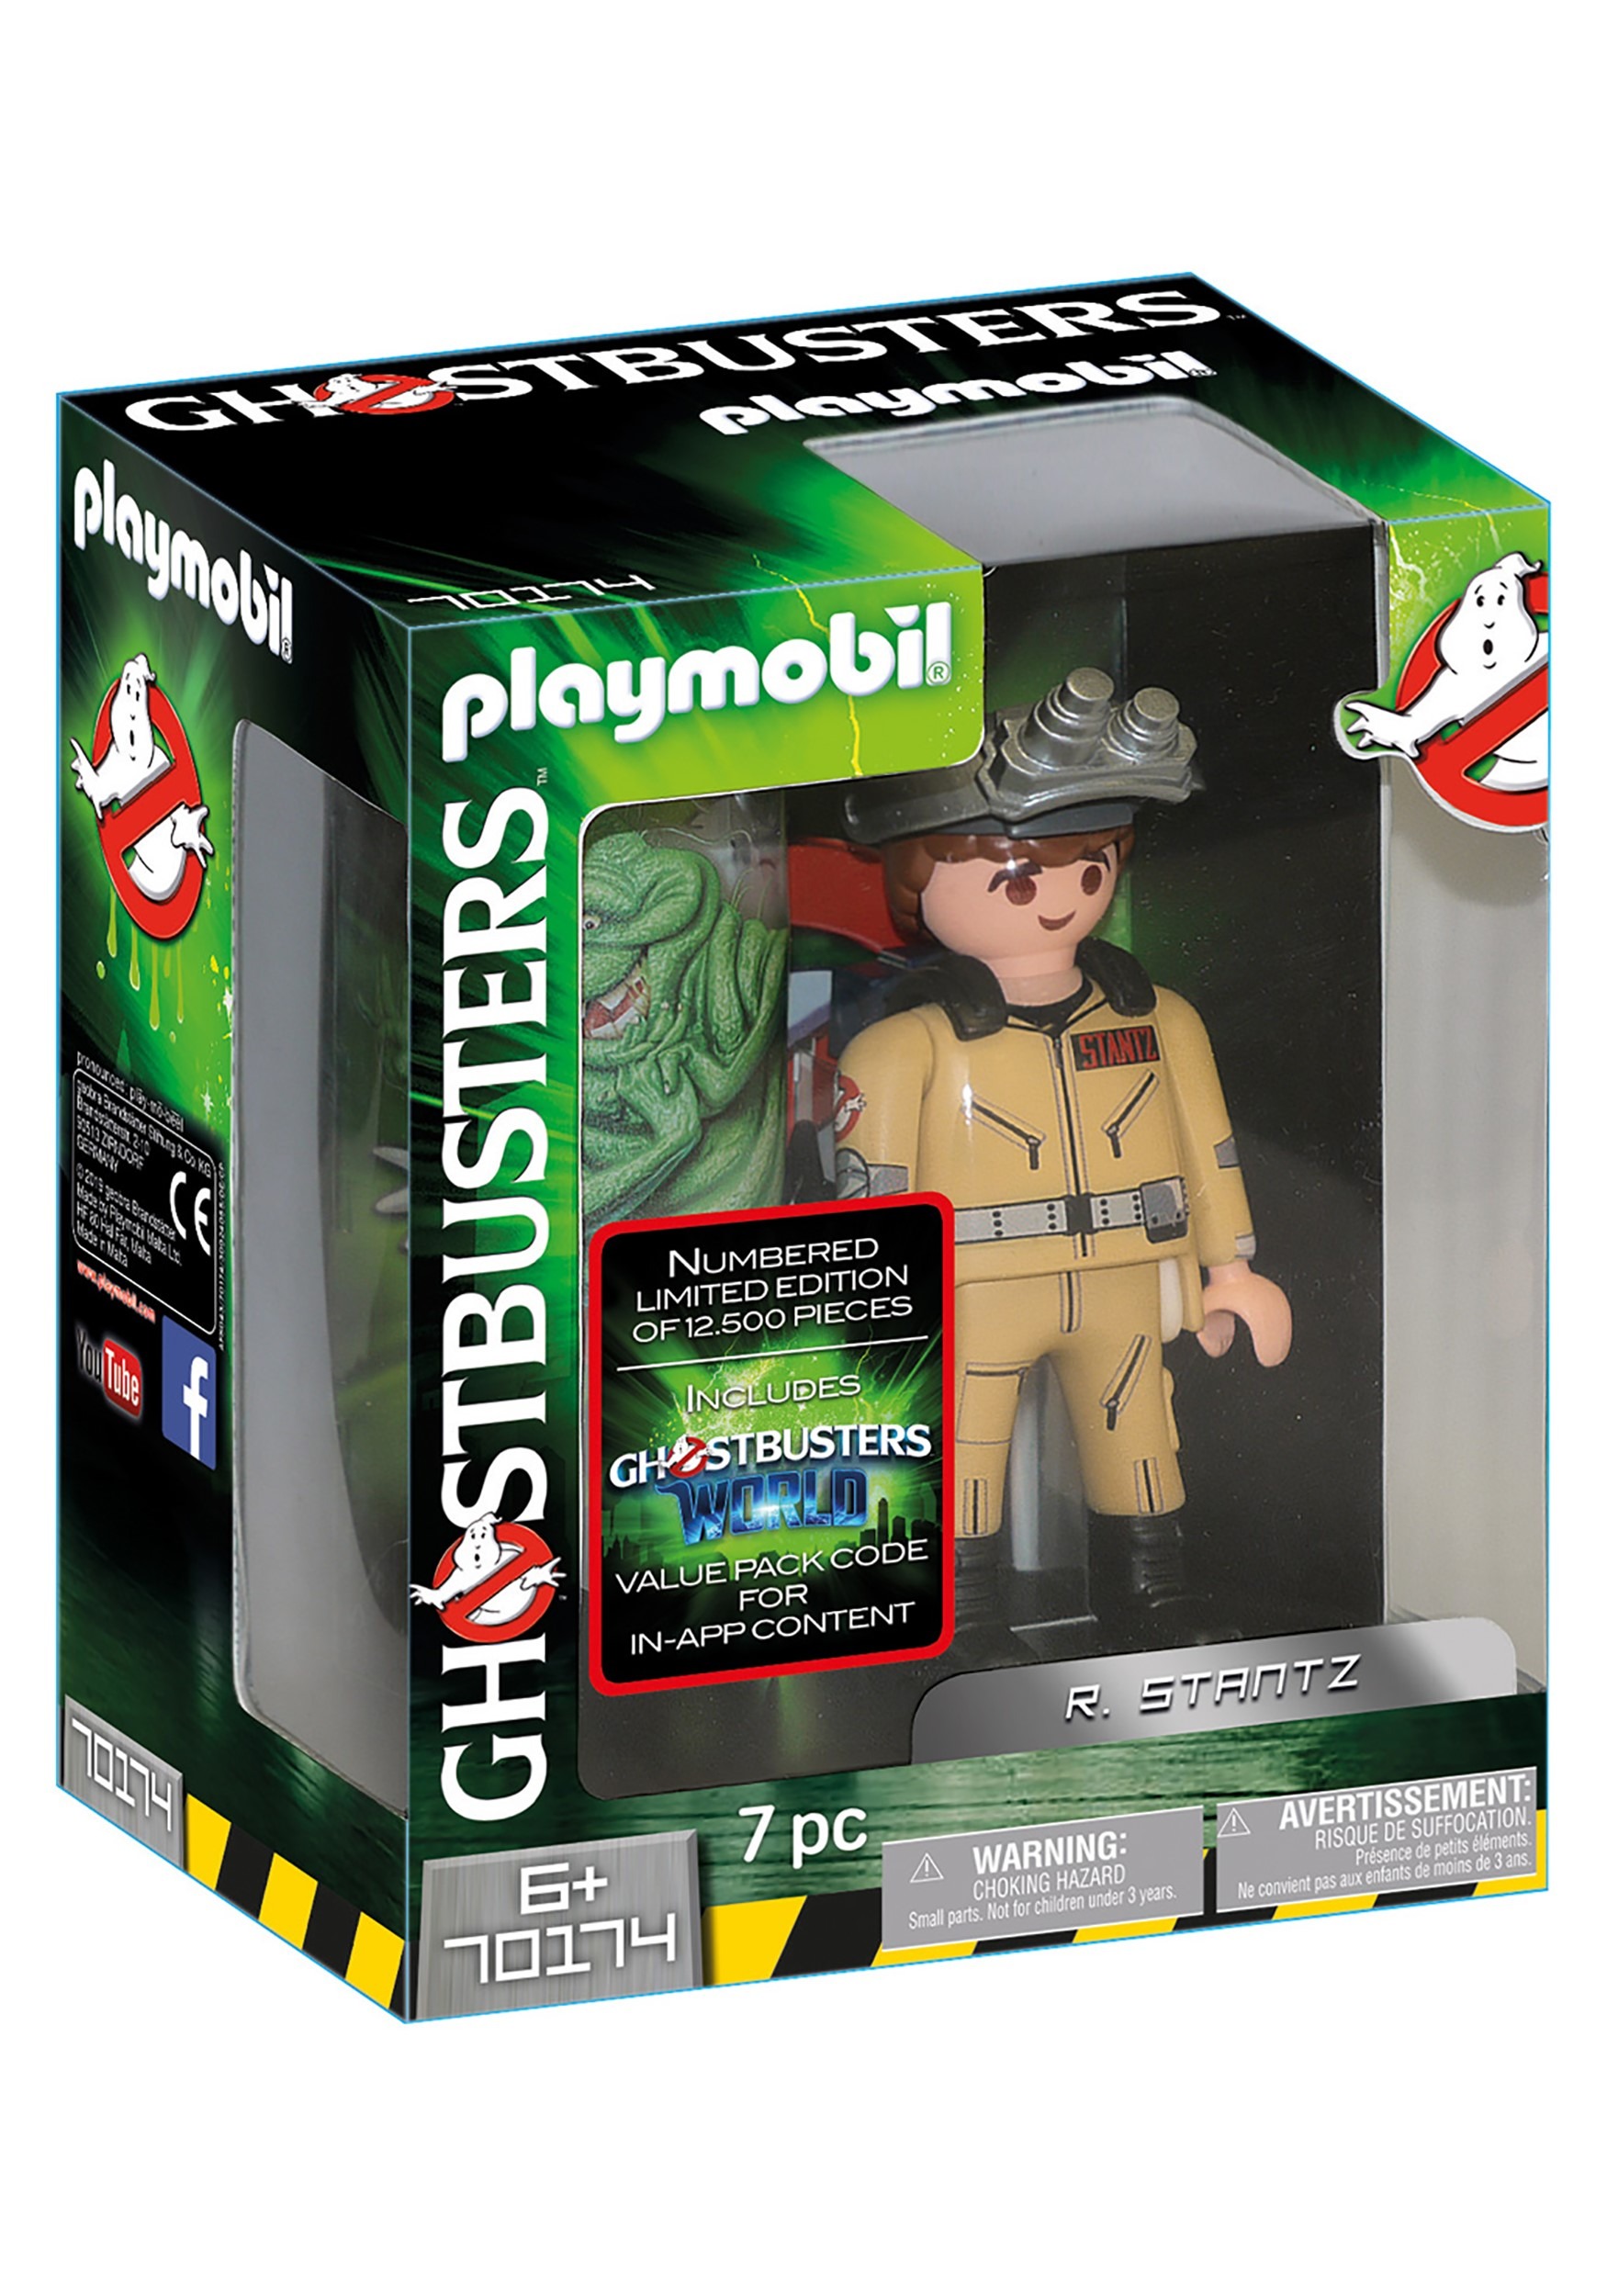 Playmobil Figure Figurines Ghostbusters Ghostbusters Accessorie Spare 